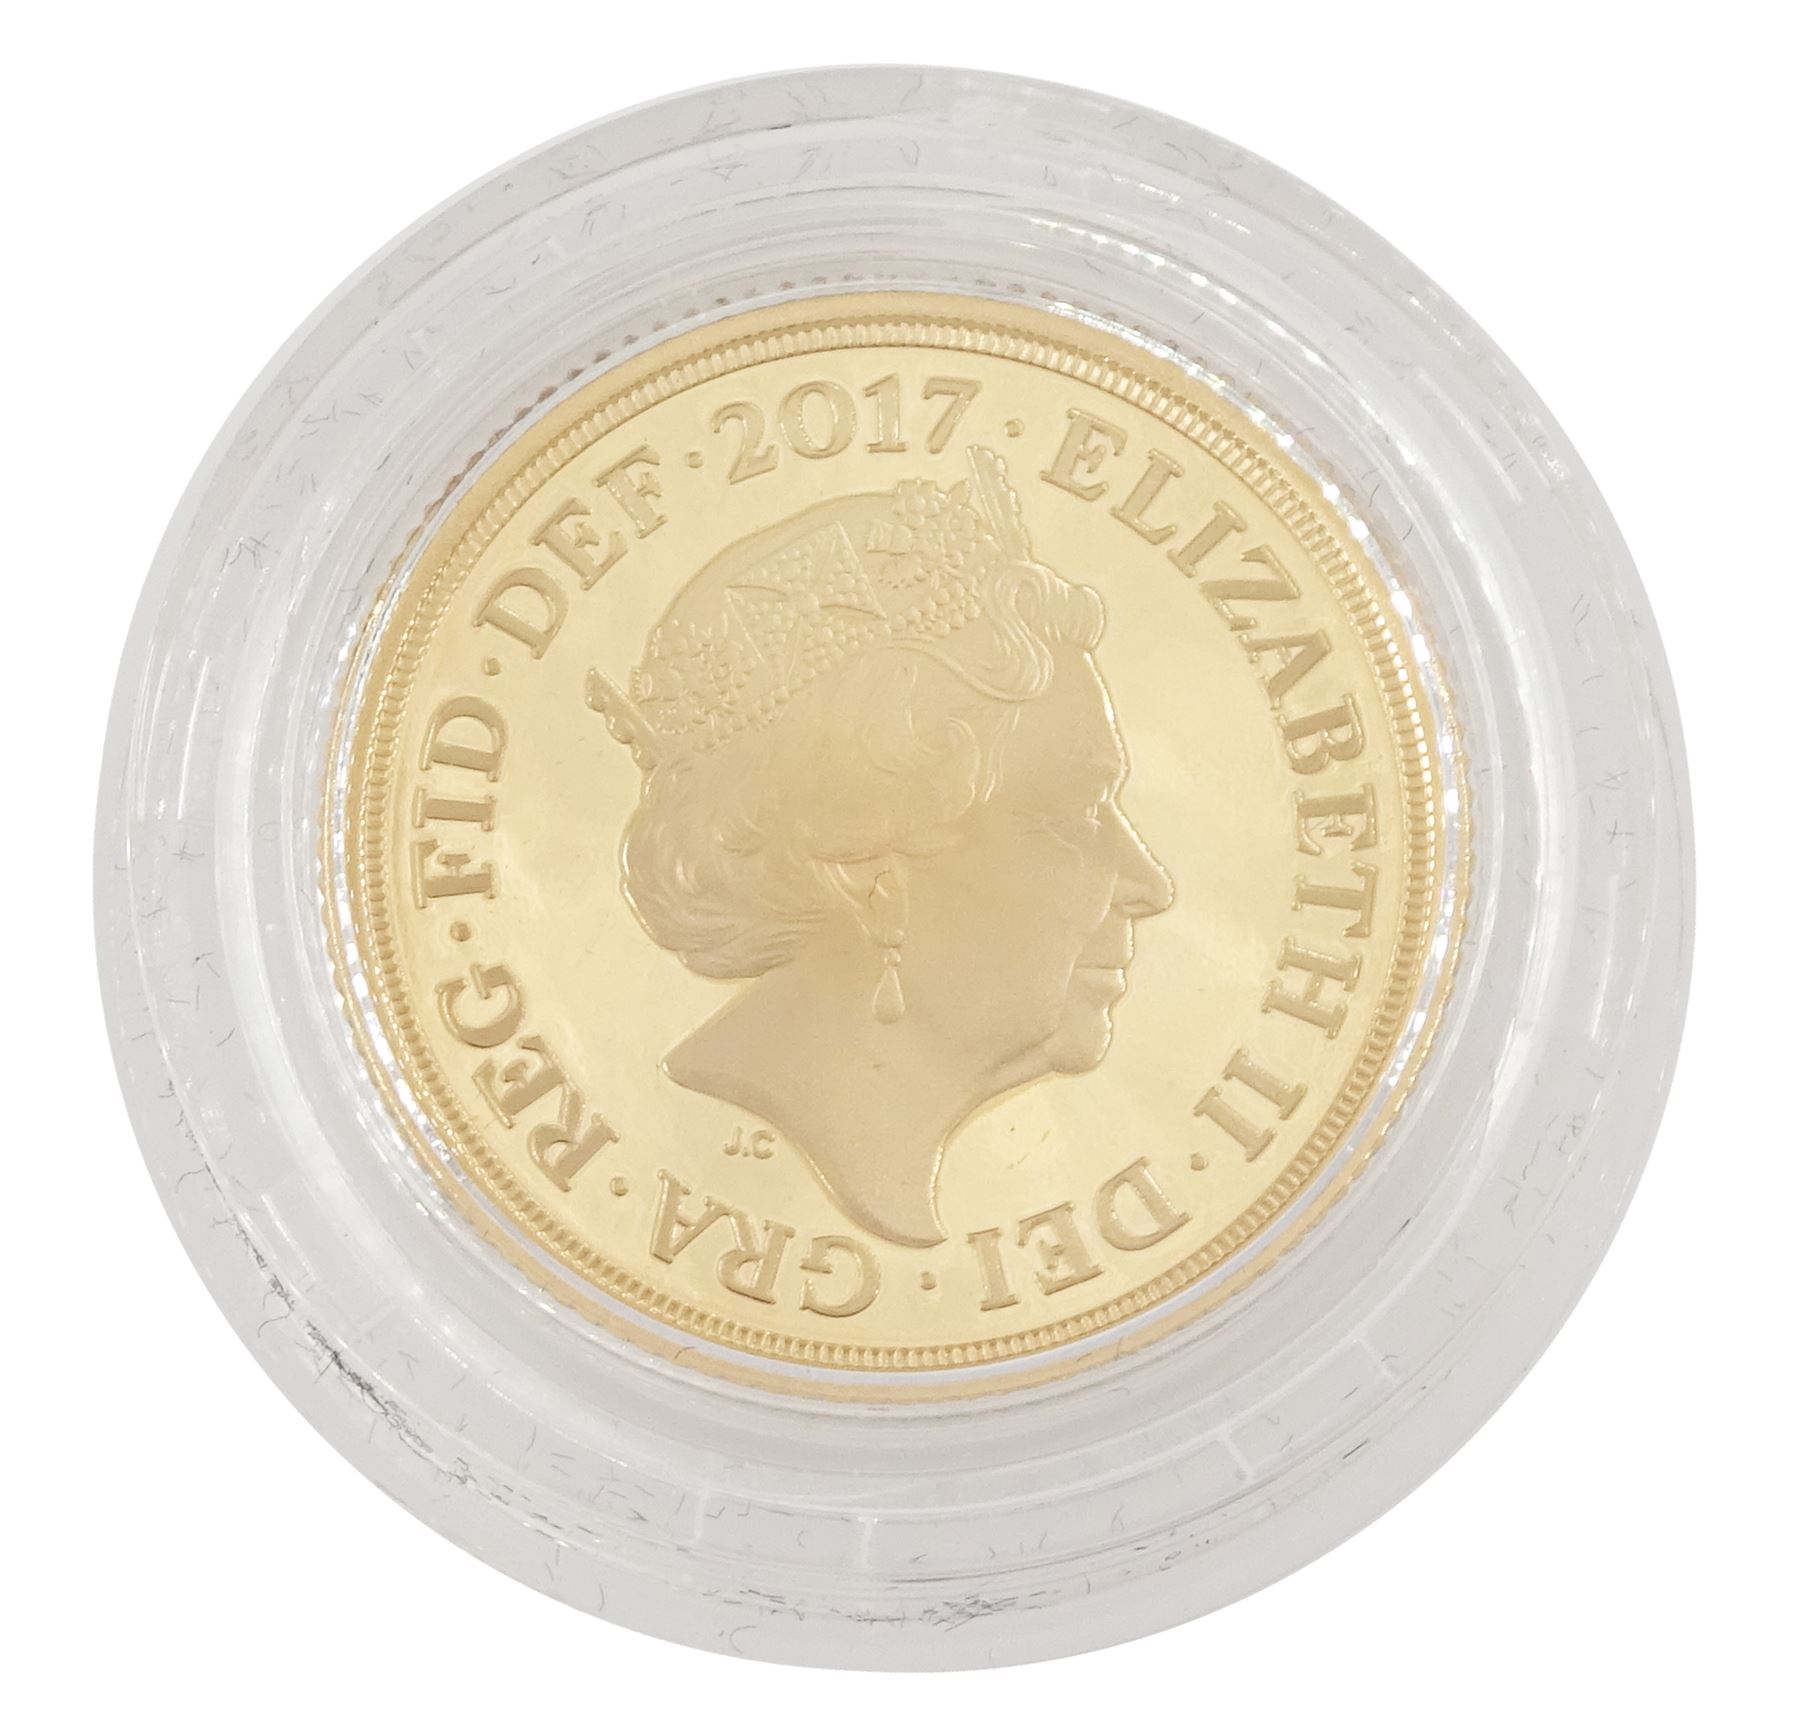 Queen Elizabeth II 2017 gold proof sovereign coin - Image 2 of 3